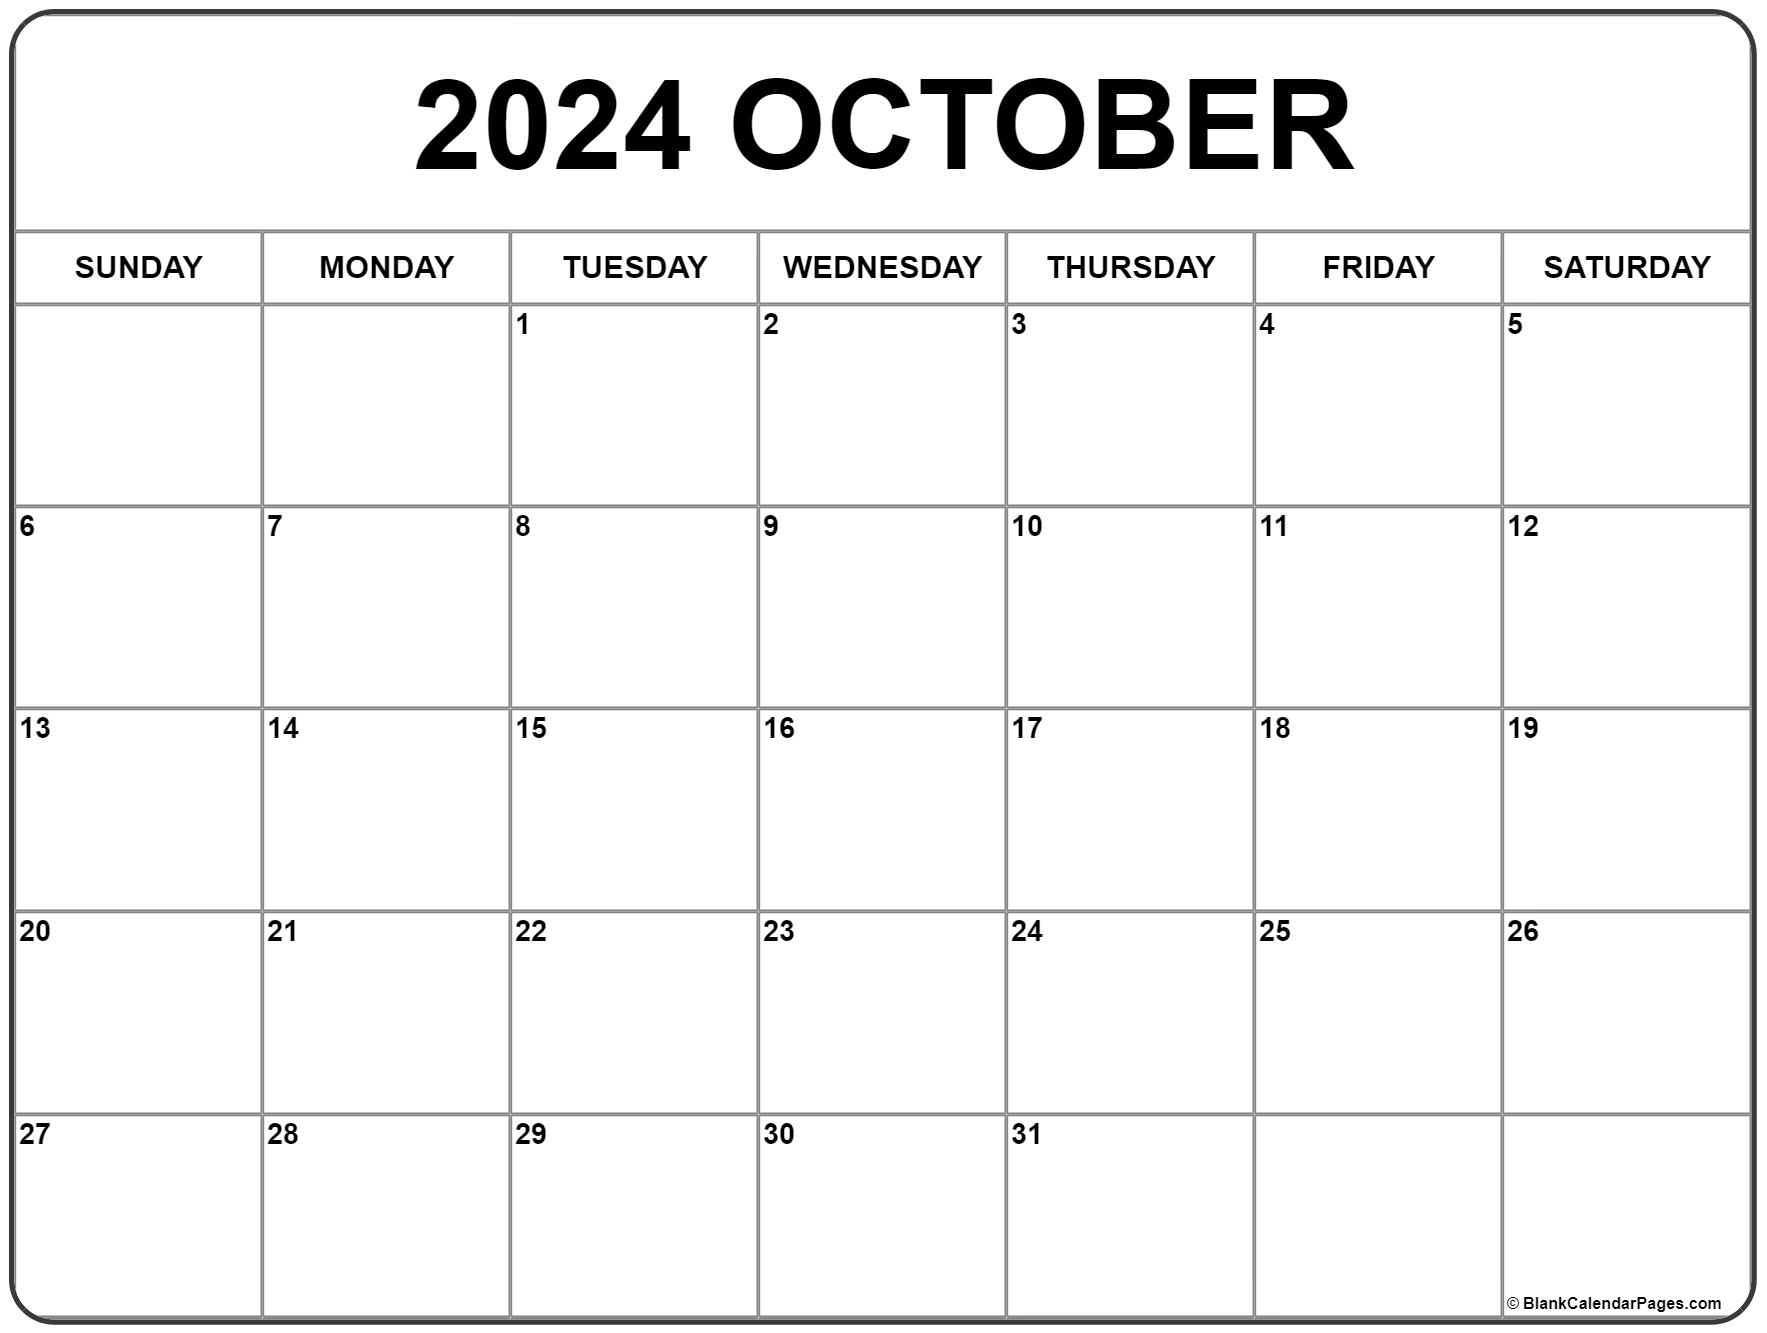 printable-calendar-october-2020-printable-world-holiday